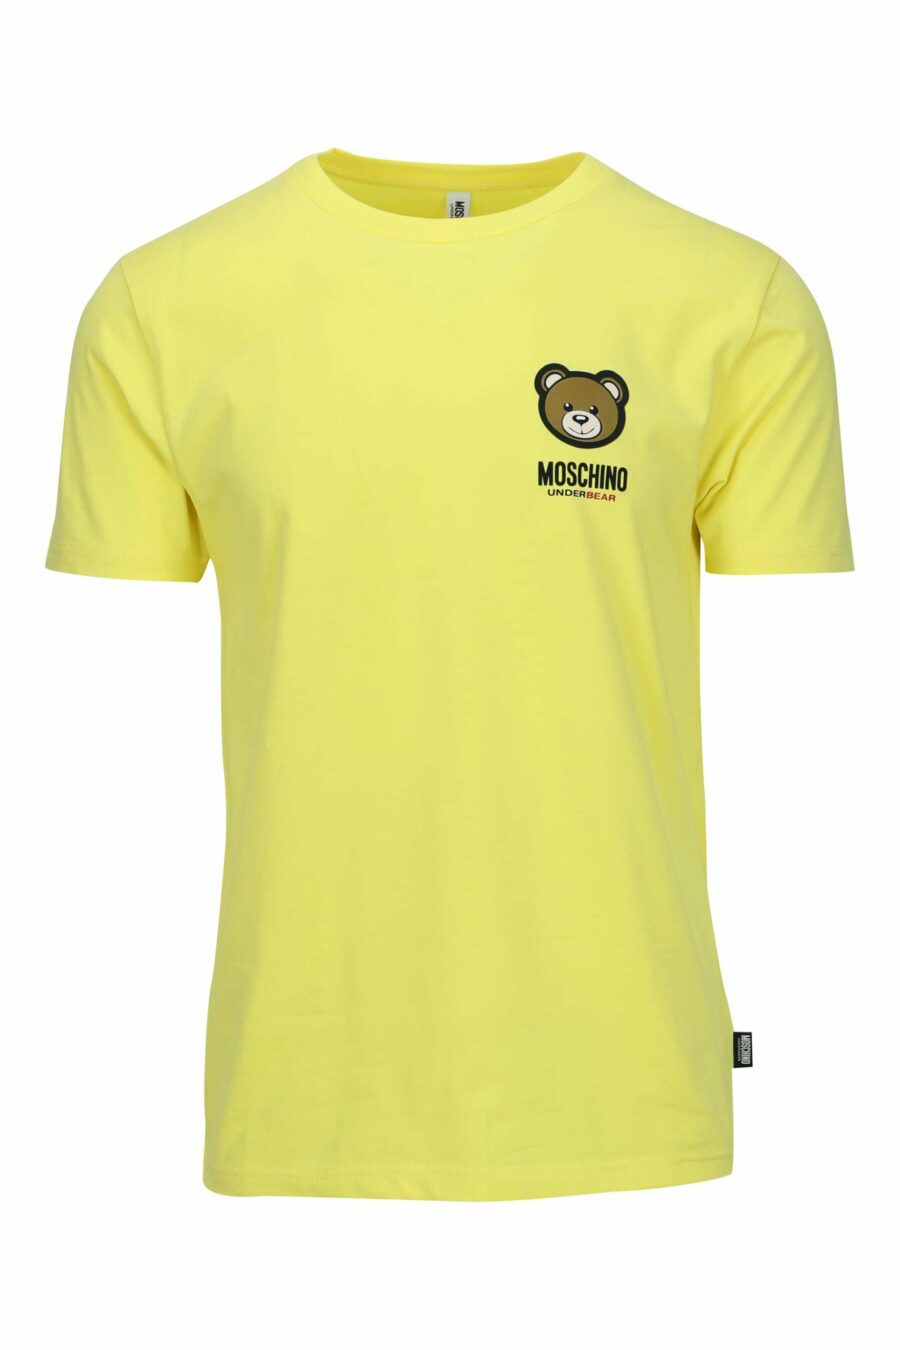 Gelbes T-Shirt mit Mini-Logo-Bärenaufnäher "underbear" - 667113605913 skaliert